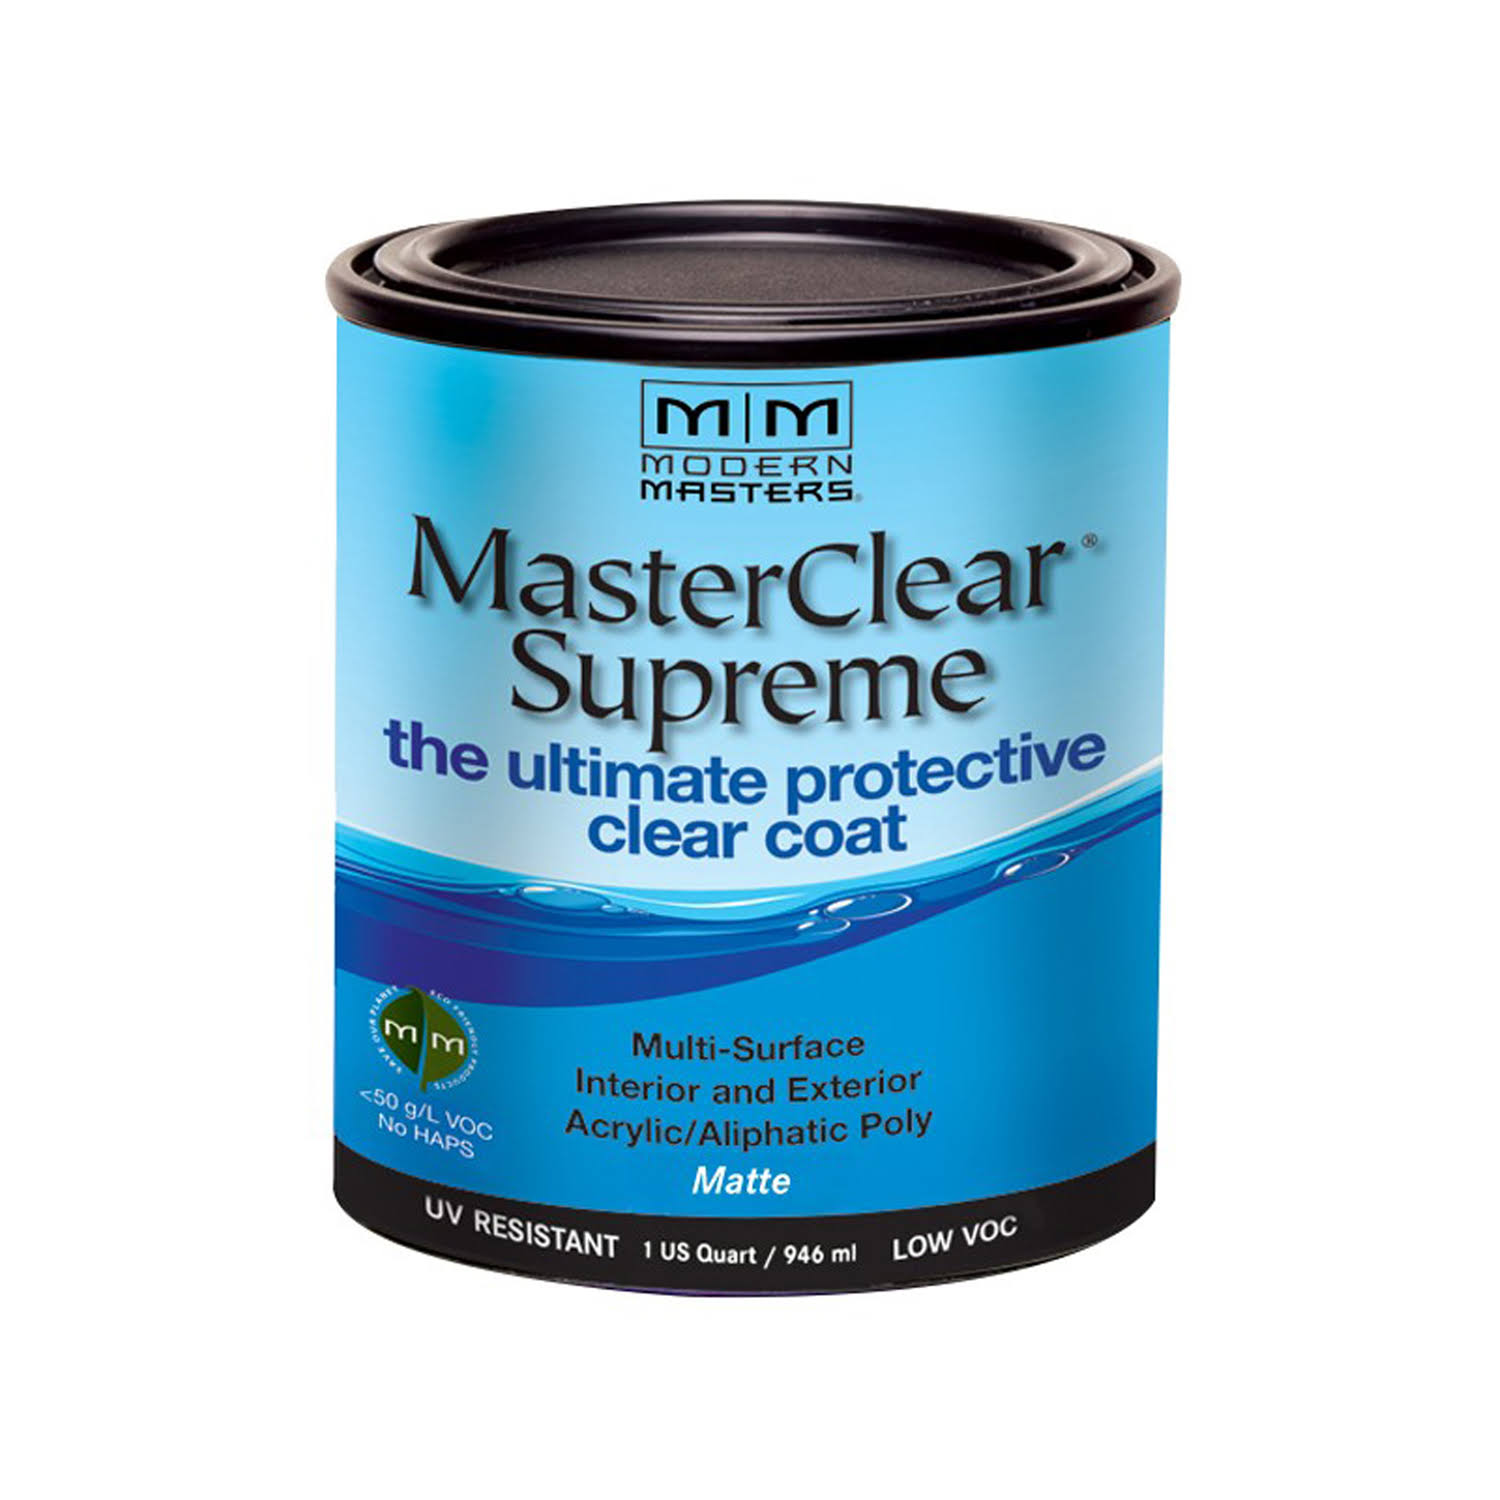 Modern Masters MasterClear Supreme Clear Coat - Matte